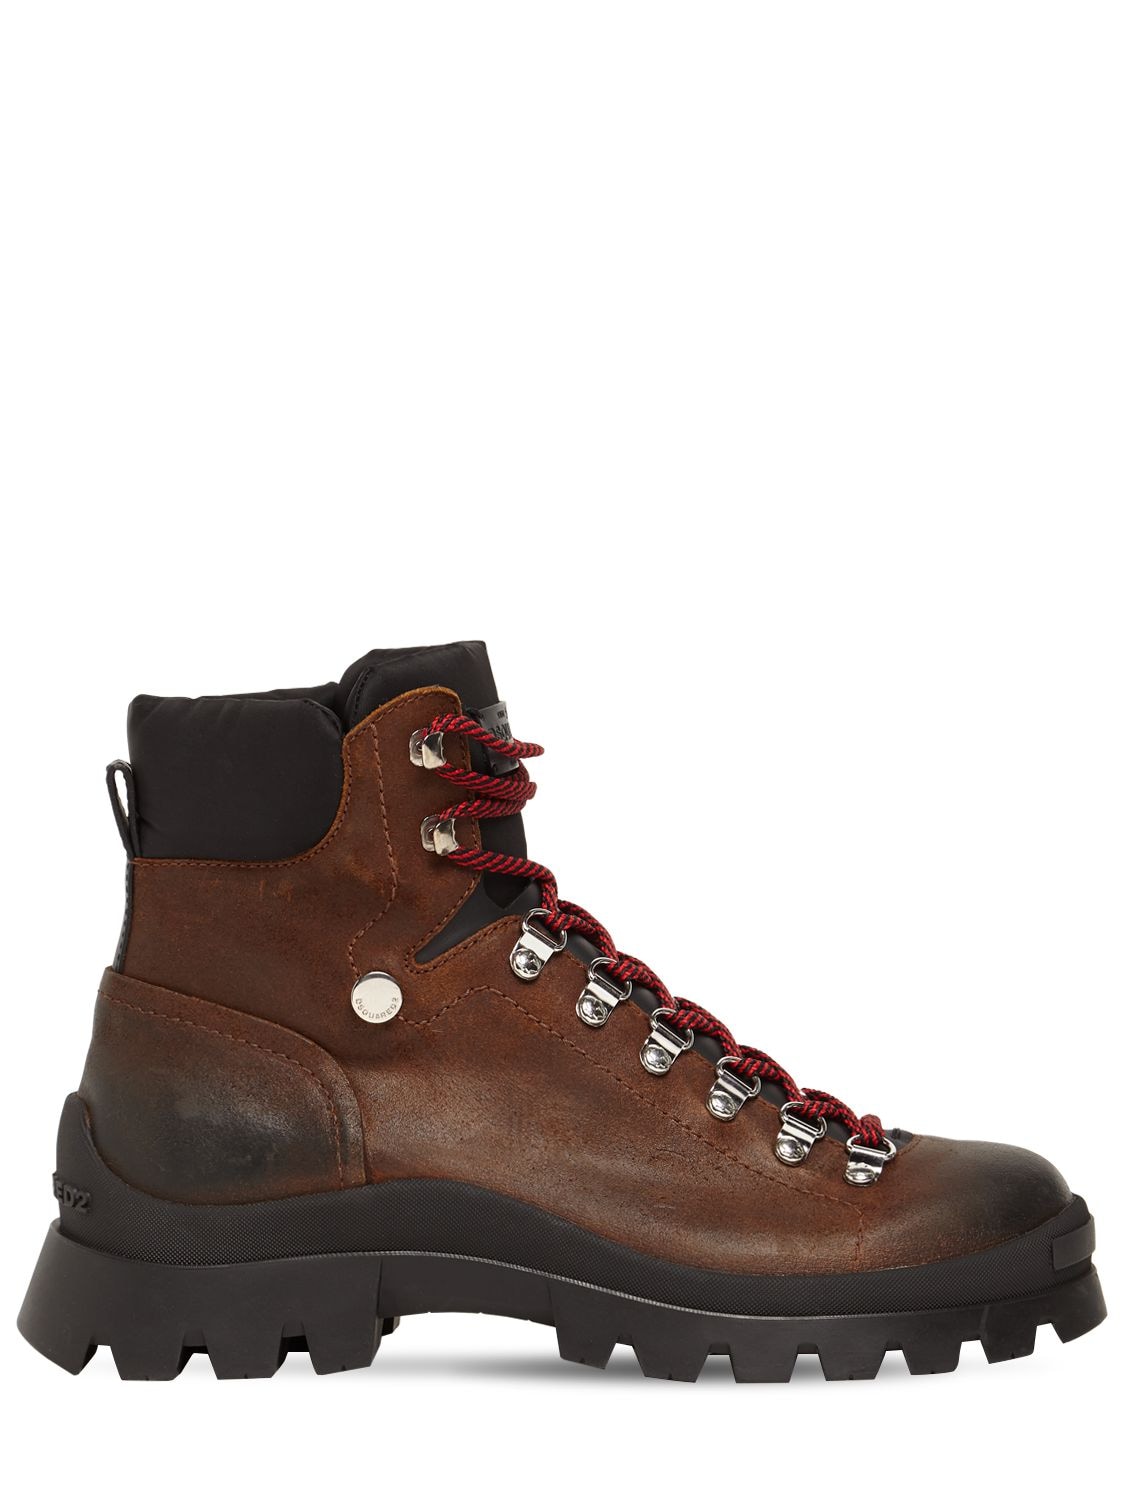 Crosta Ingrassato Leather Hiking Boots